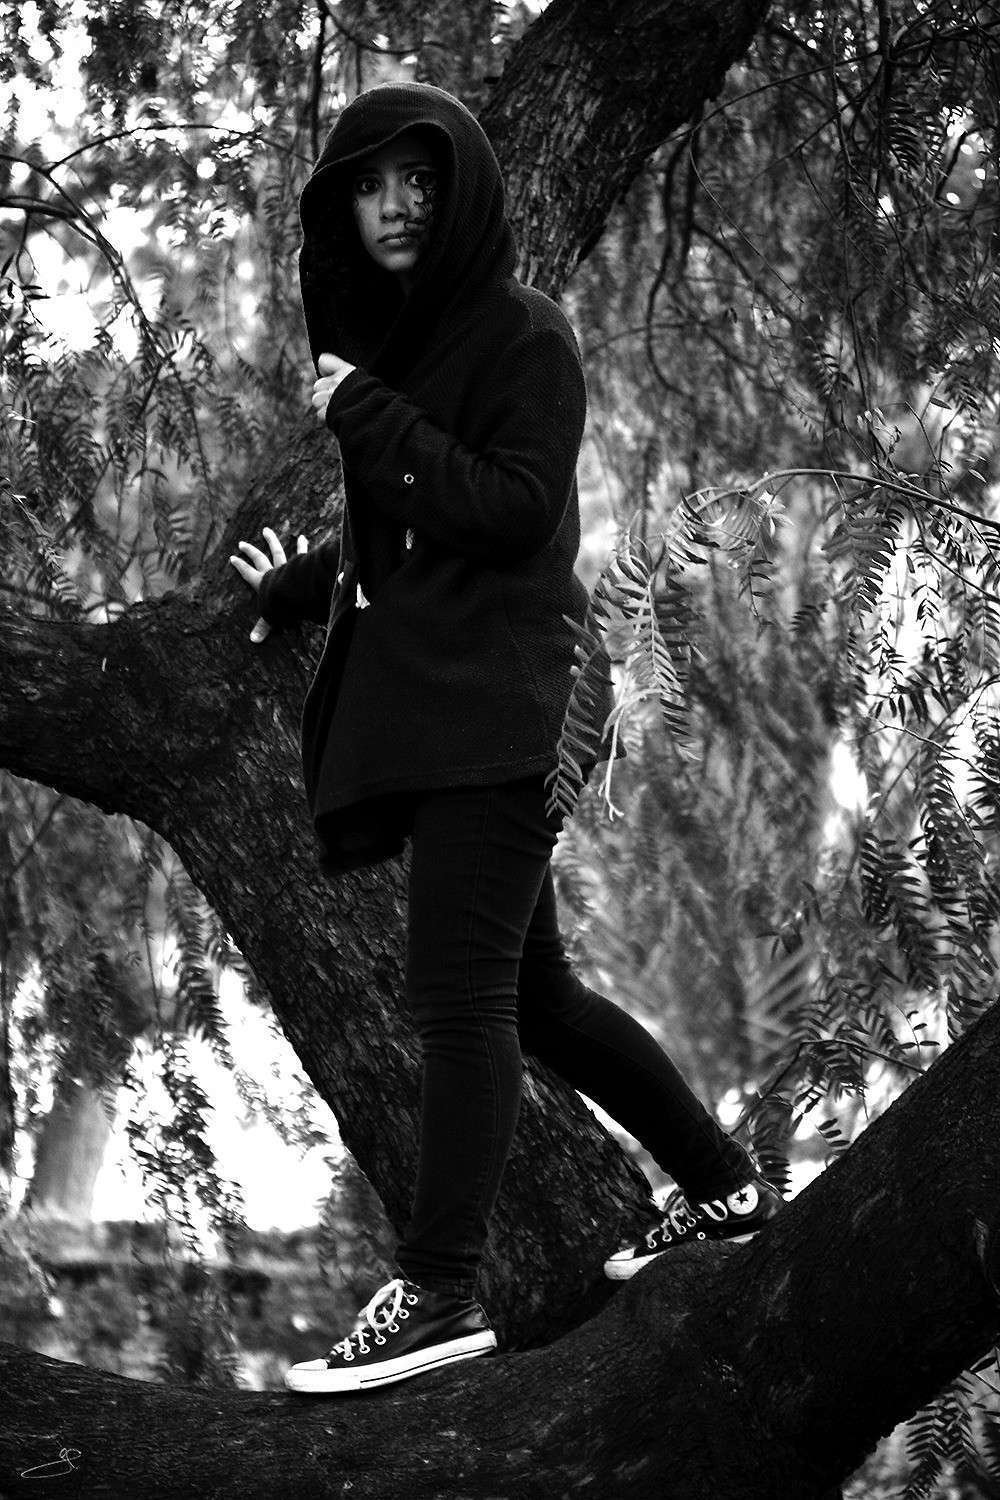 Photograph: Gabriela on a tree